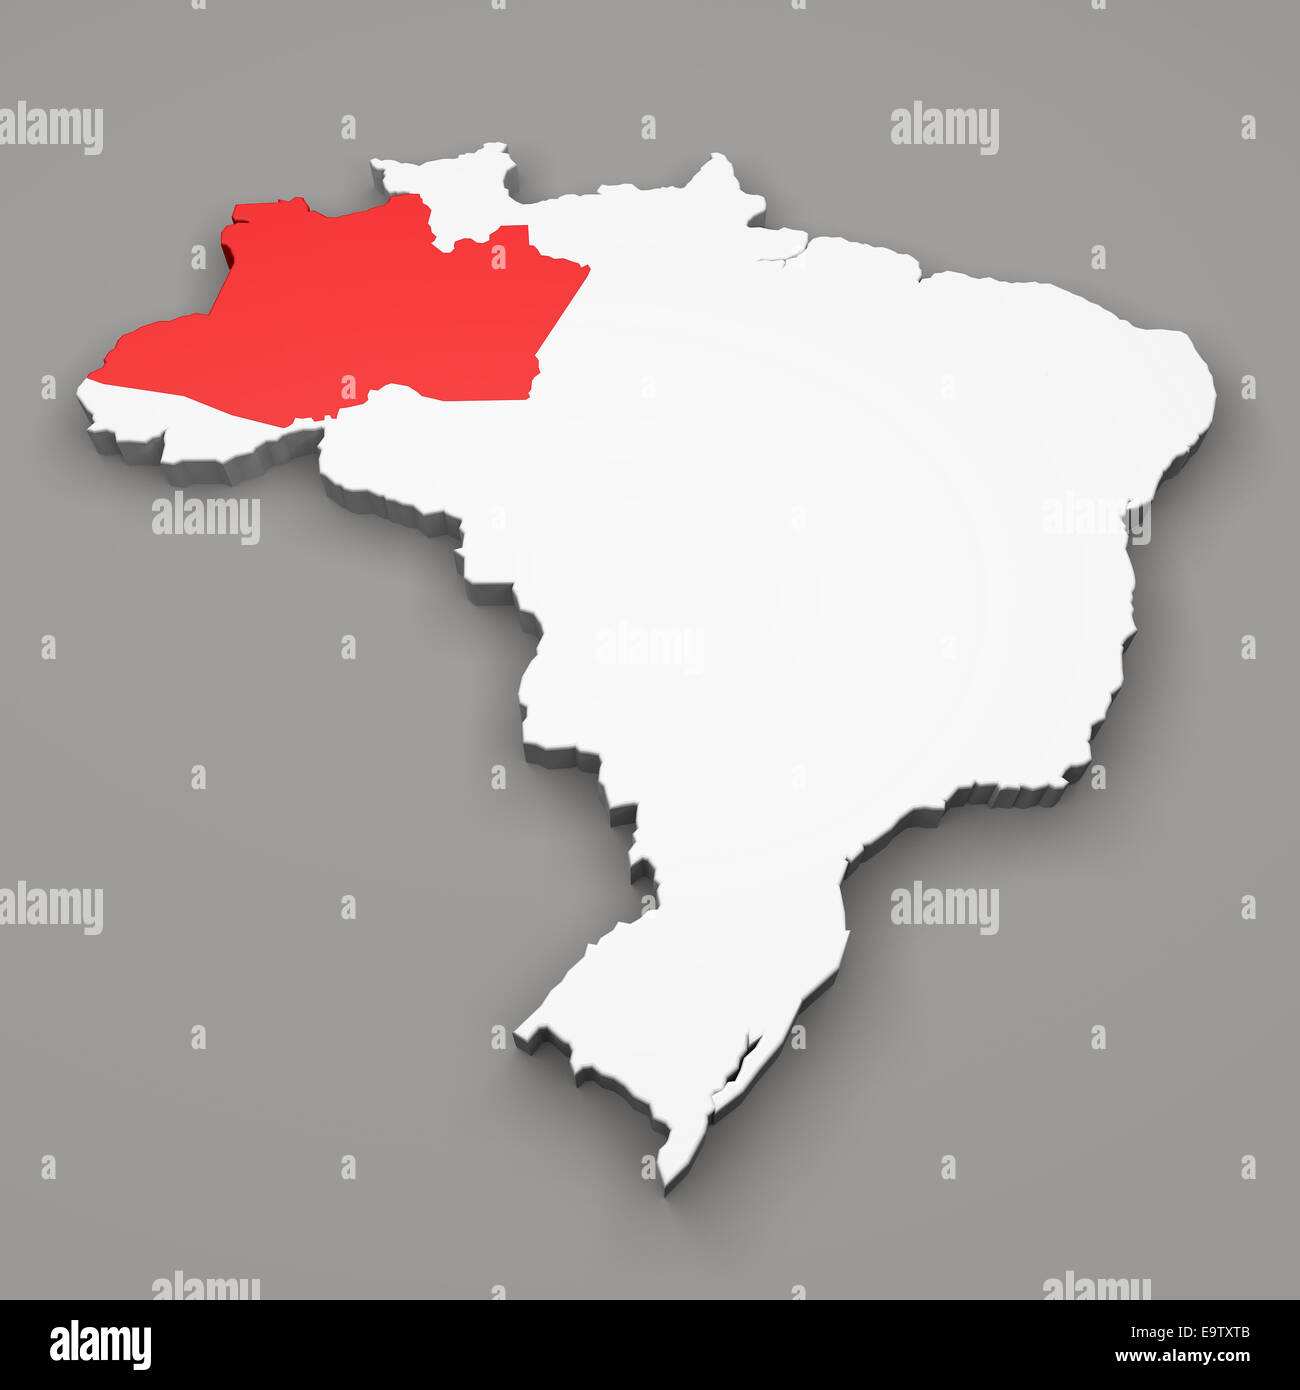 Amazonas state on map of Brazil on gray background Stock Photo